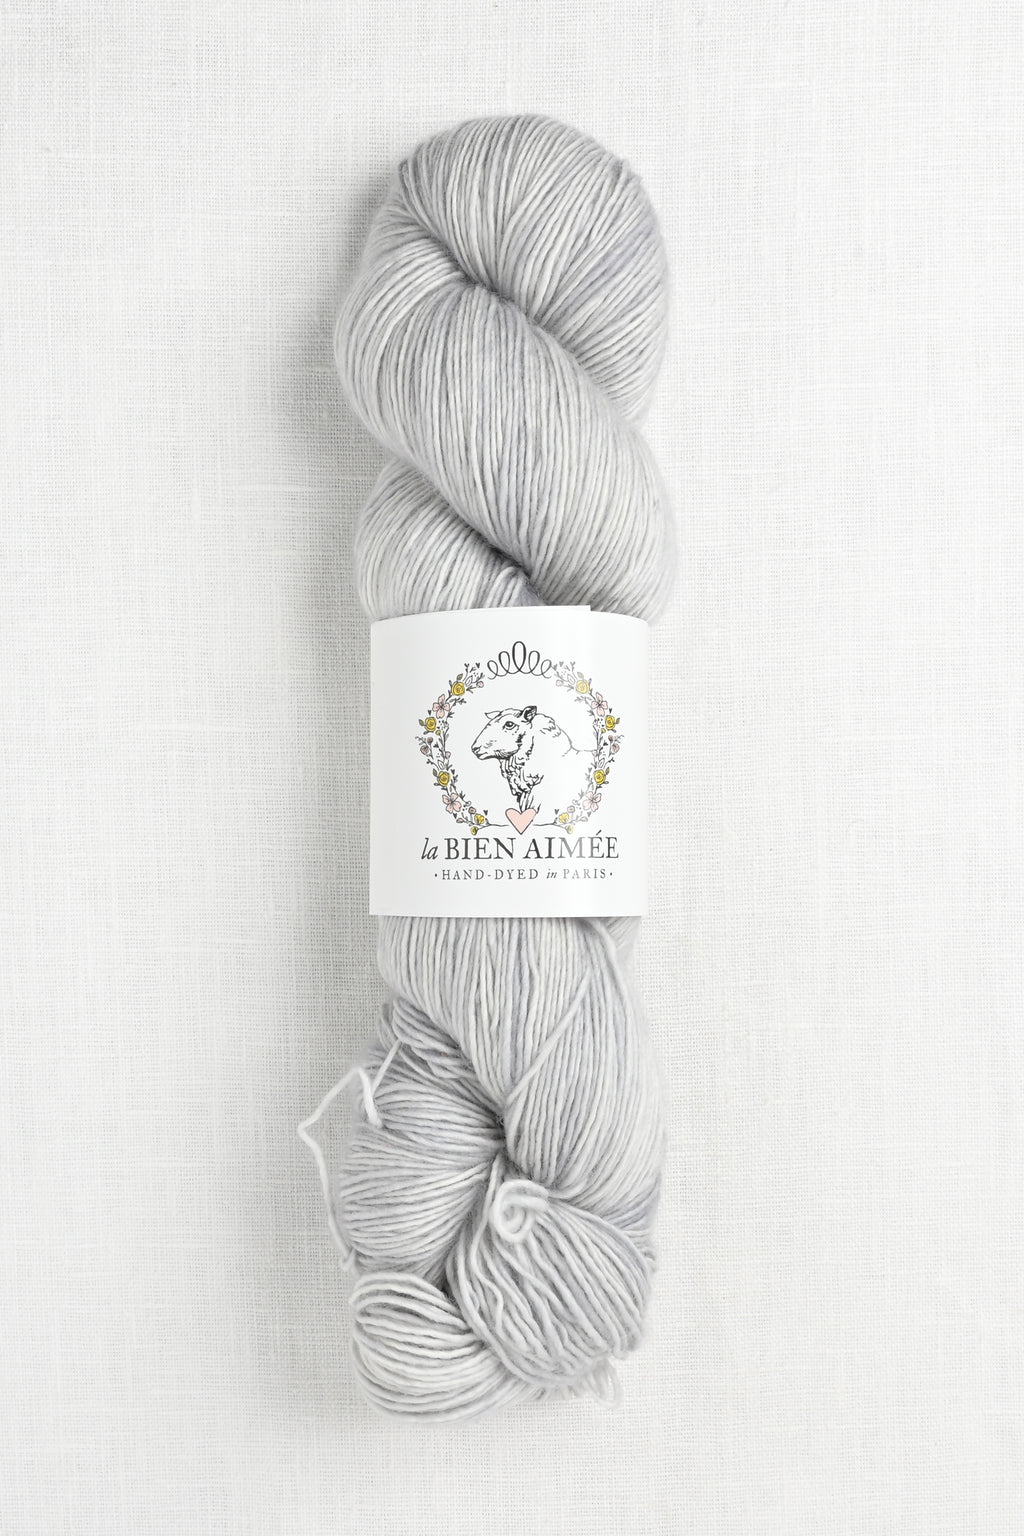 100% Wool Welcomme Paris La Pure Laine No. 4 DK Light Gray Yarn